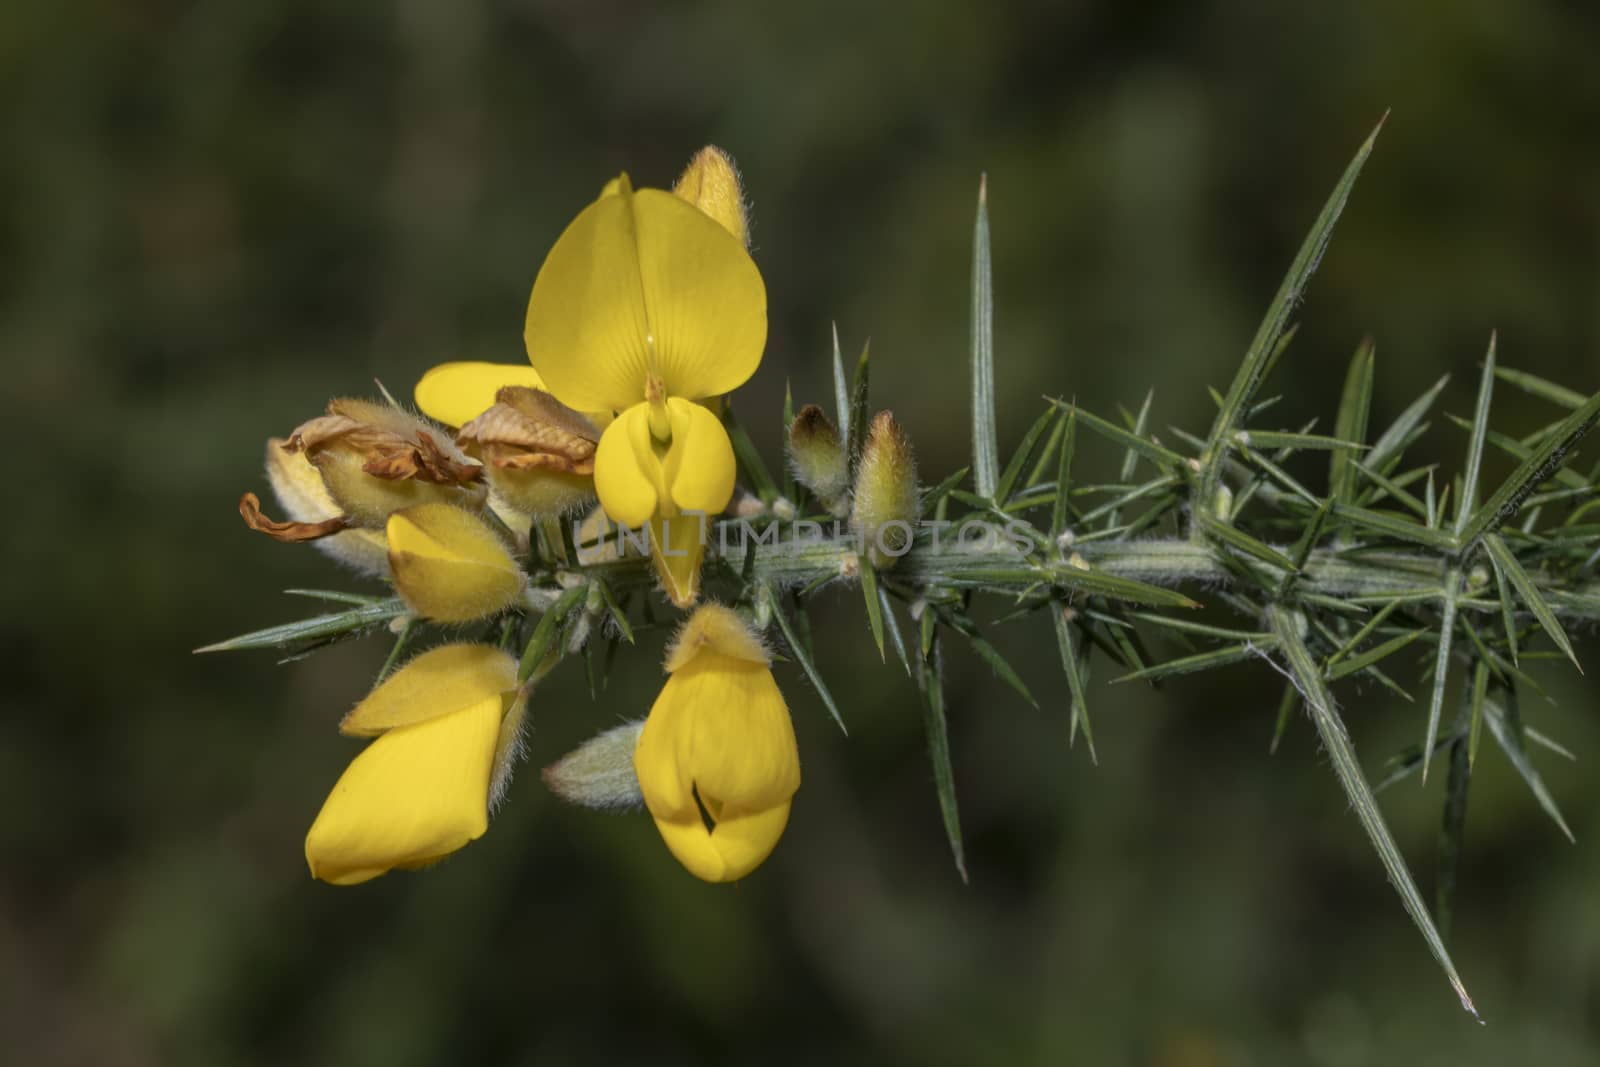 Ulex europaeus, yellow flowers close up